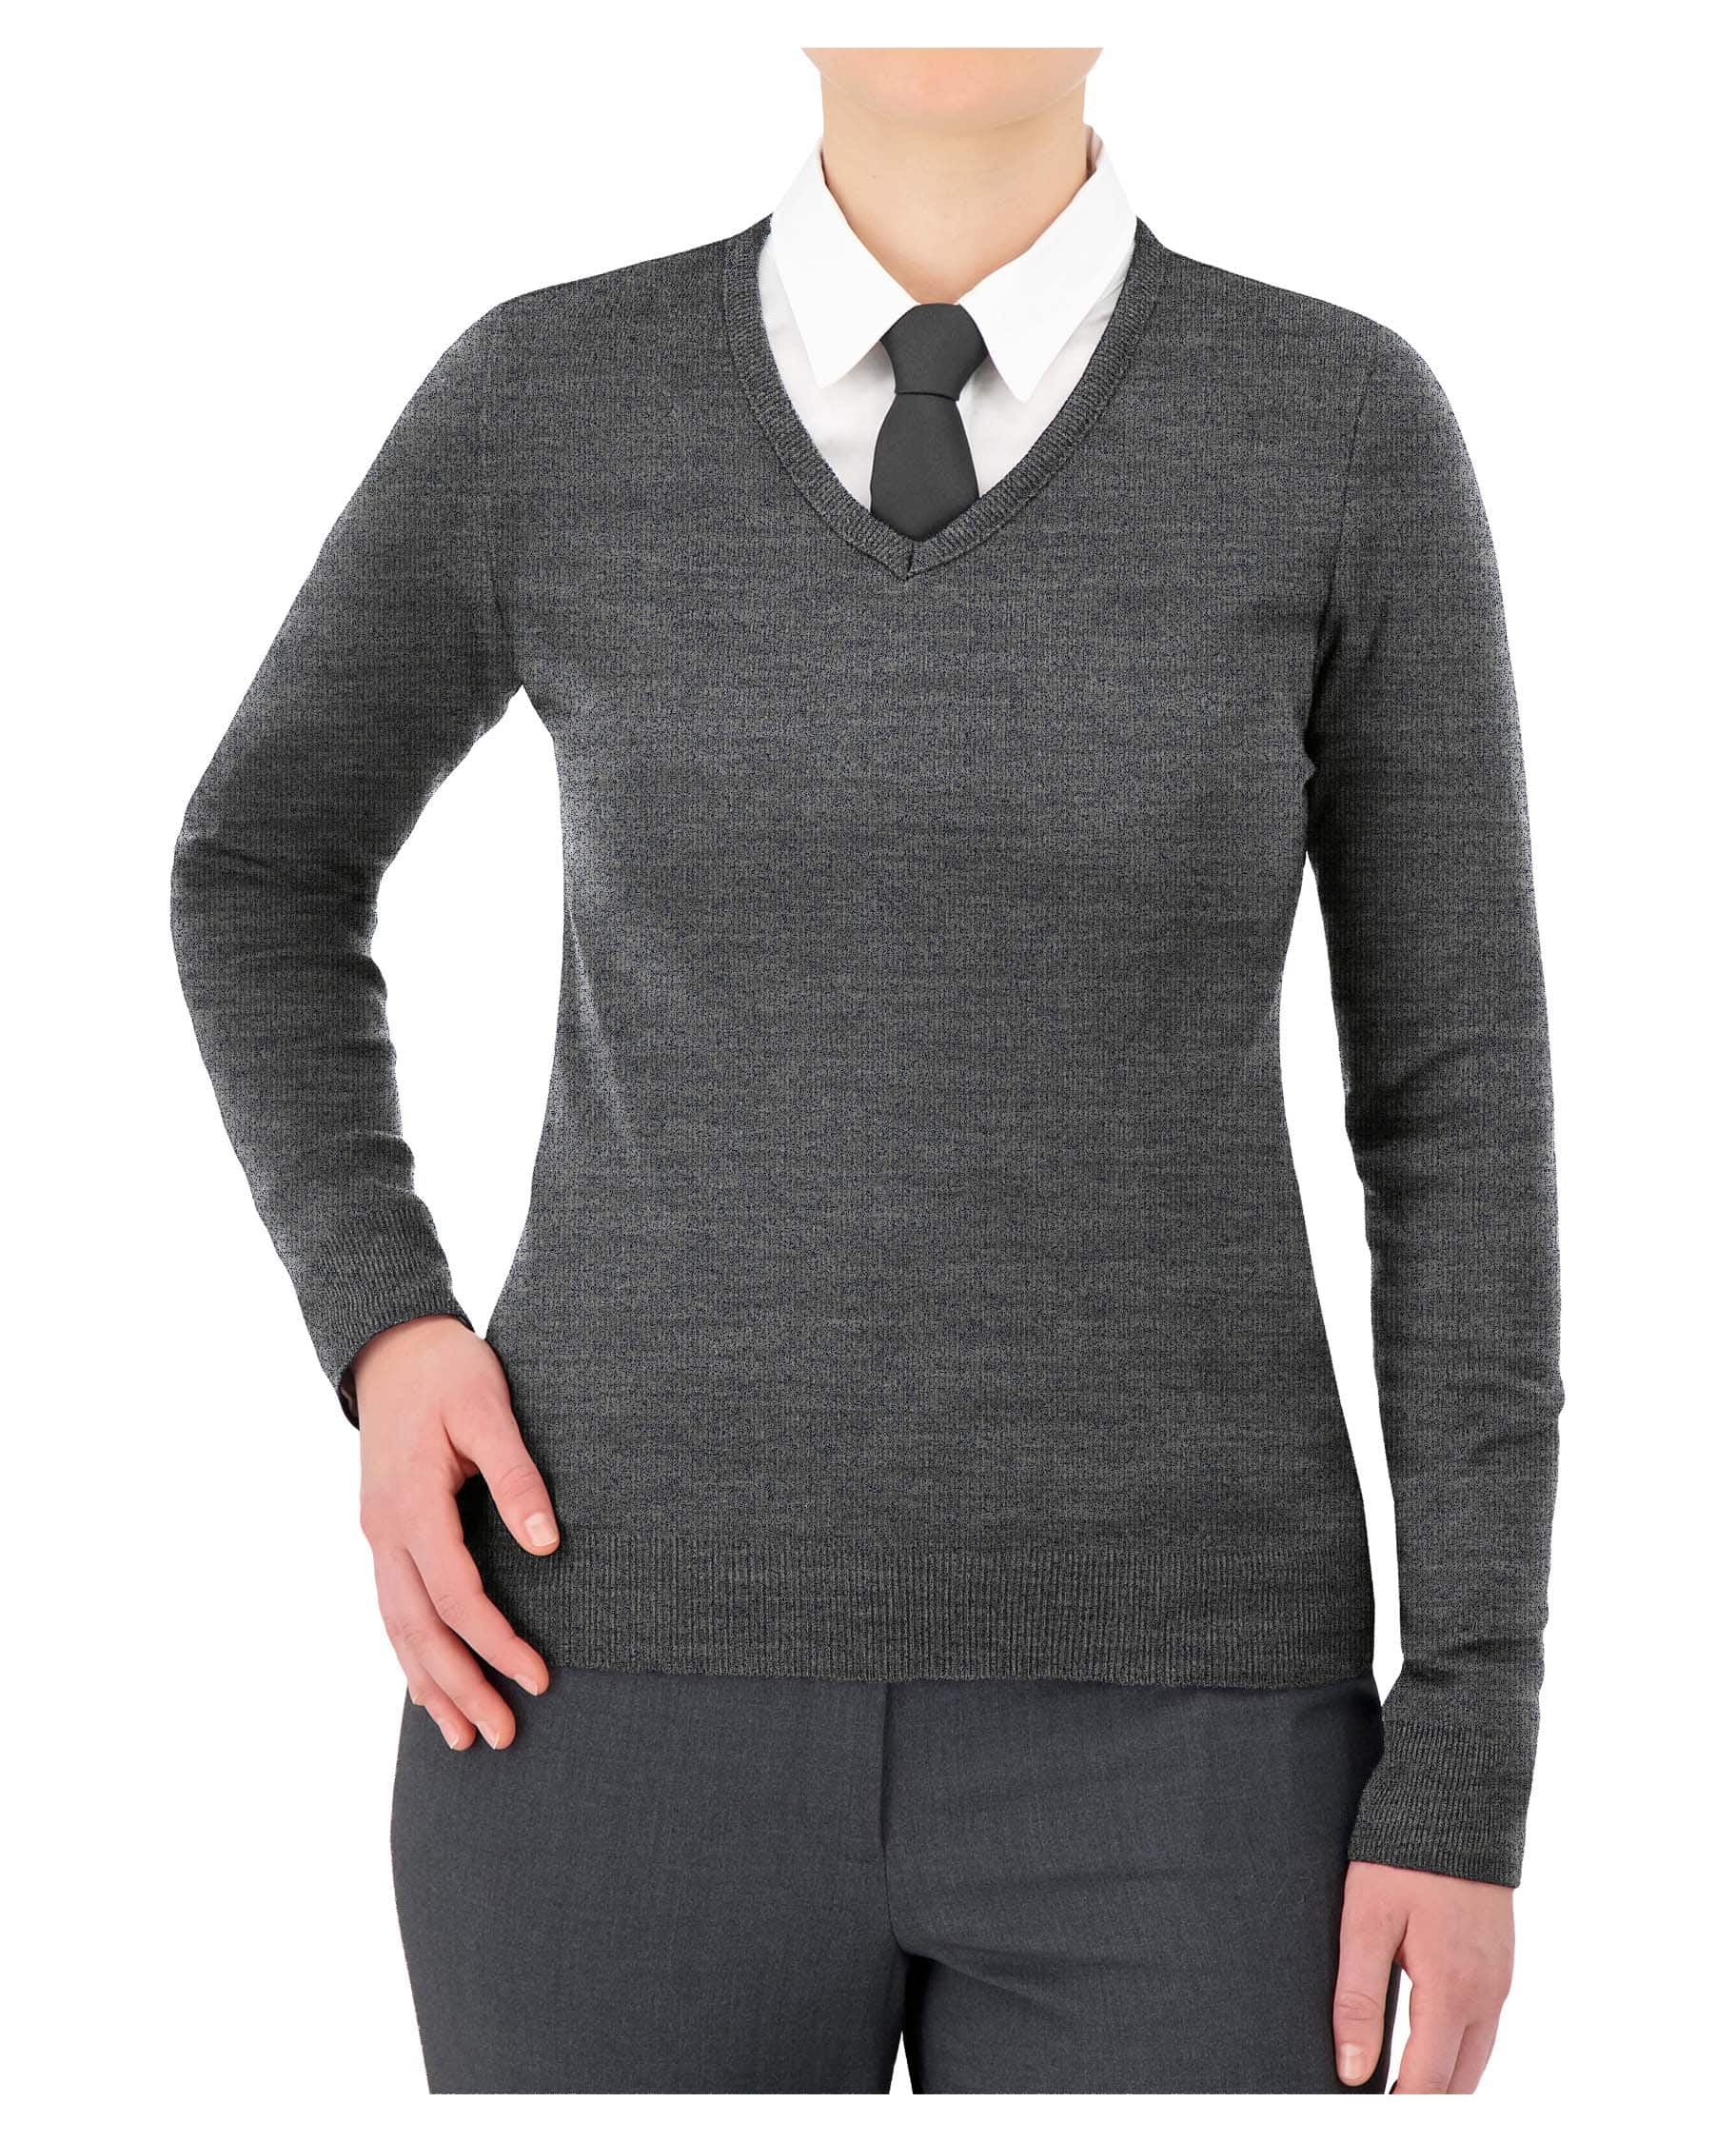 grey v-neck long sleeve sweater